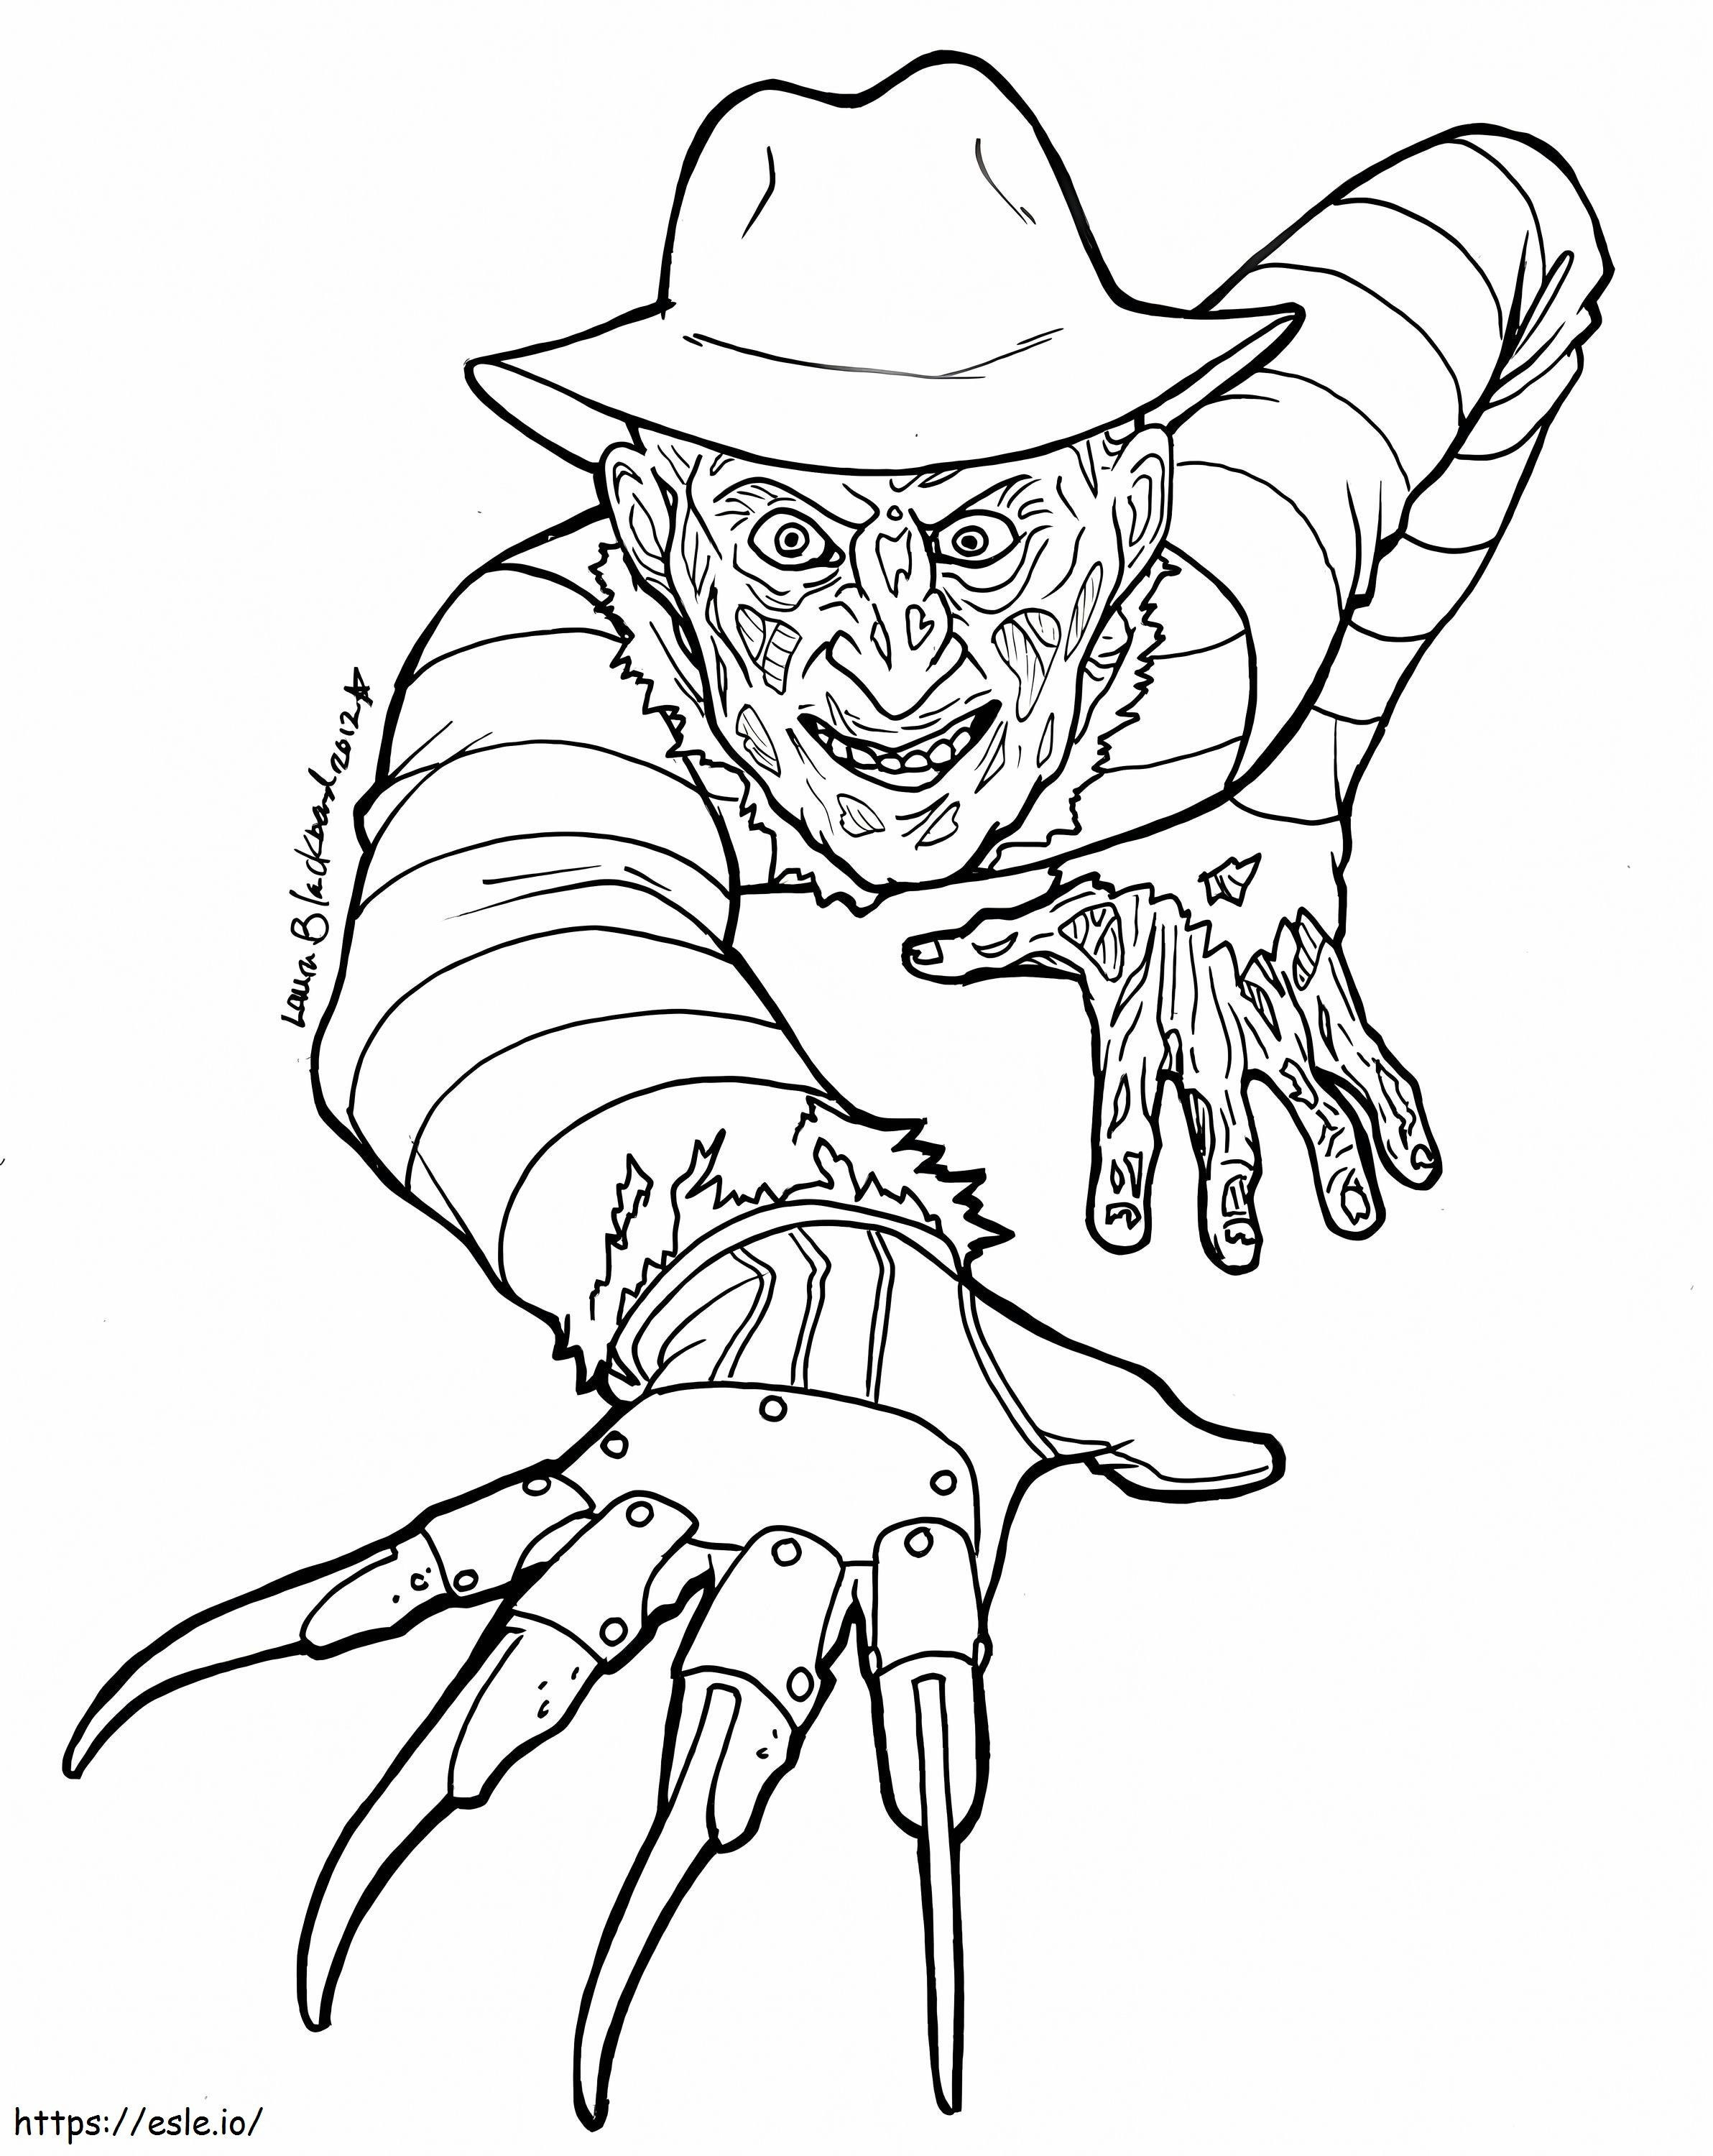 Coloriage Freddy Krueger 3 à imprimer dessin